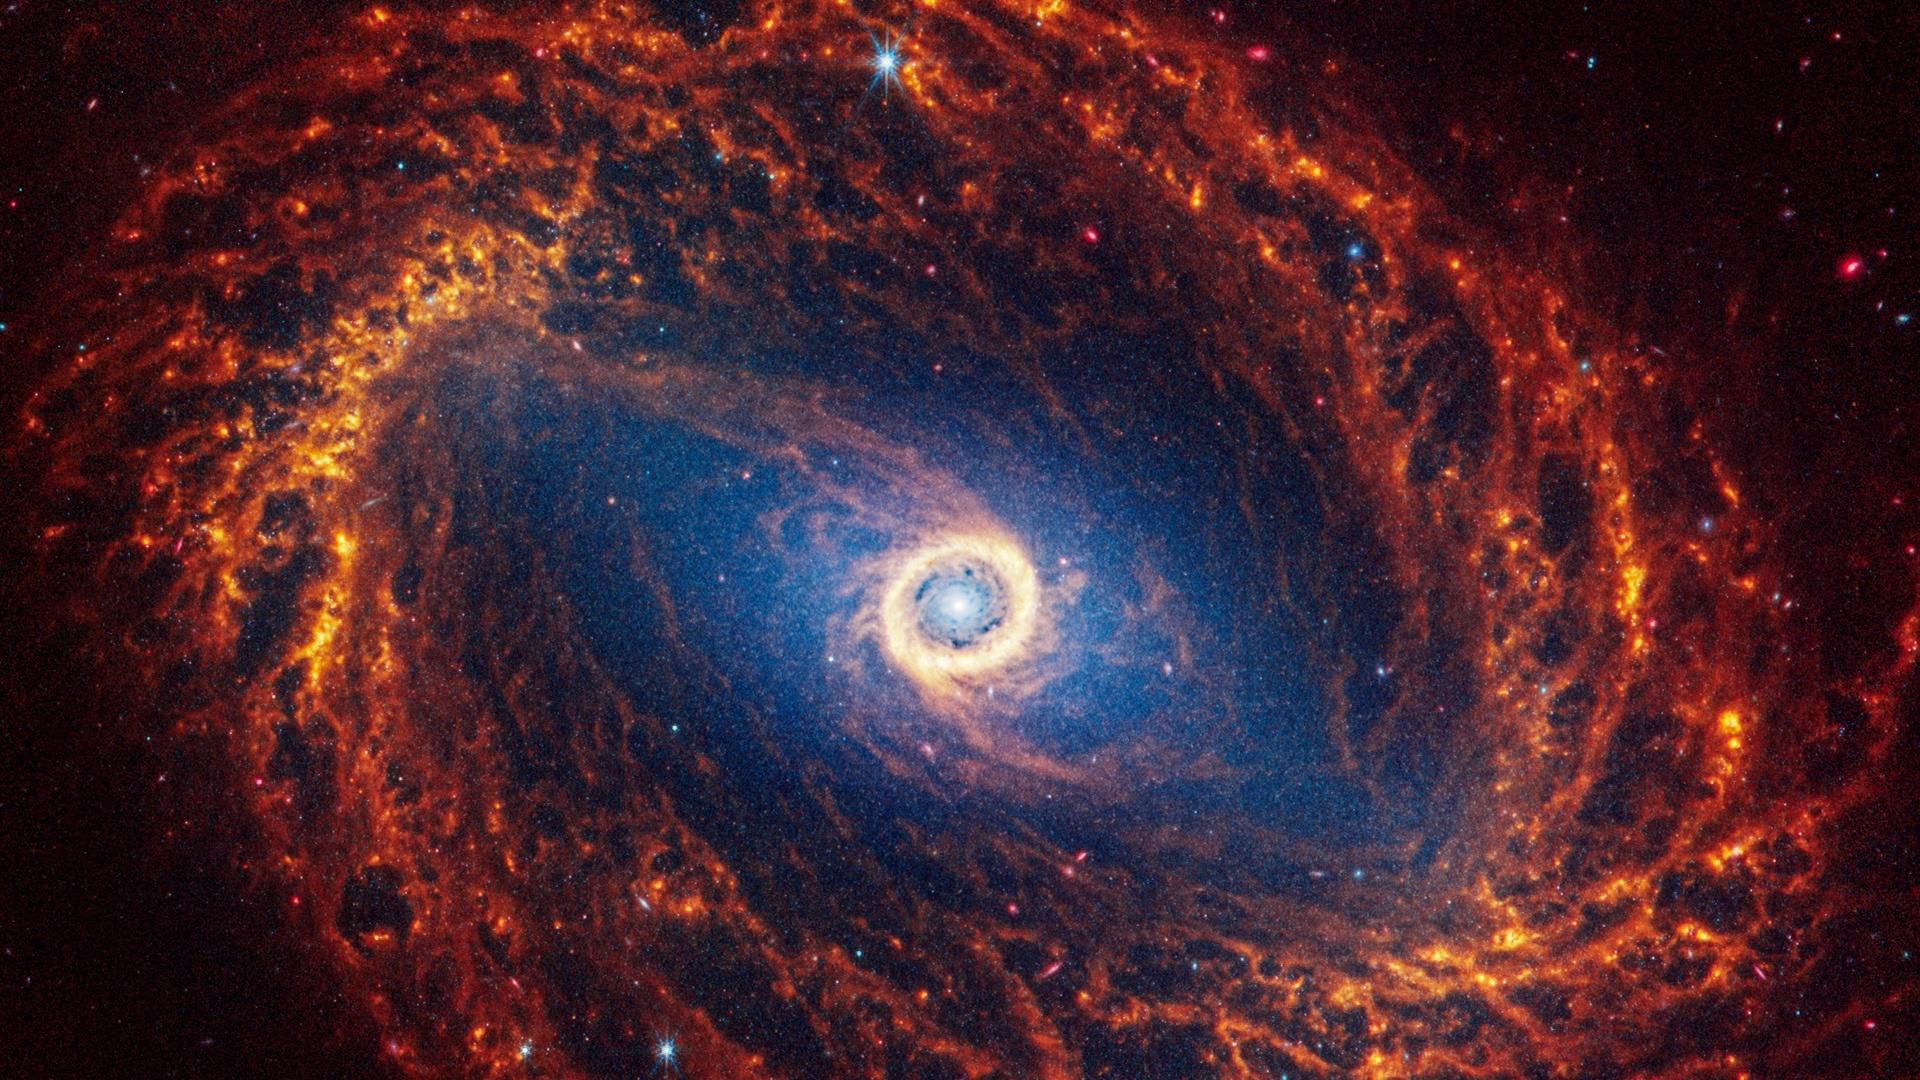 A spiral galaxy 